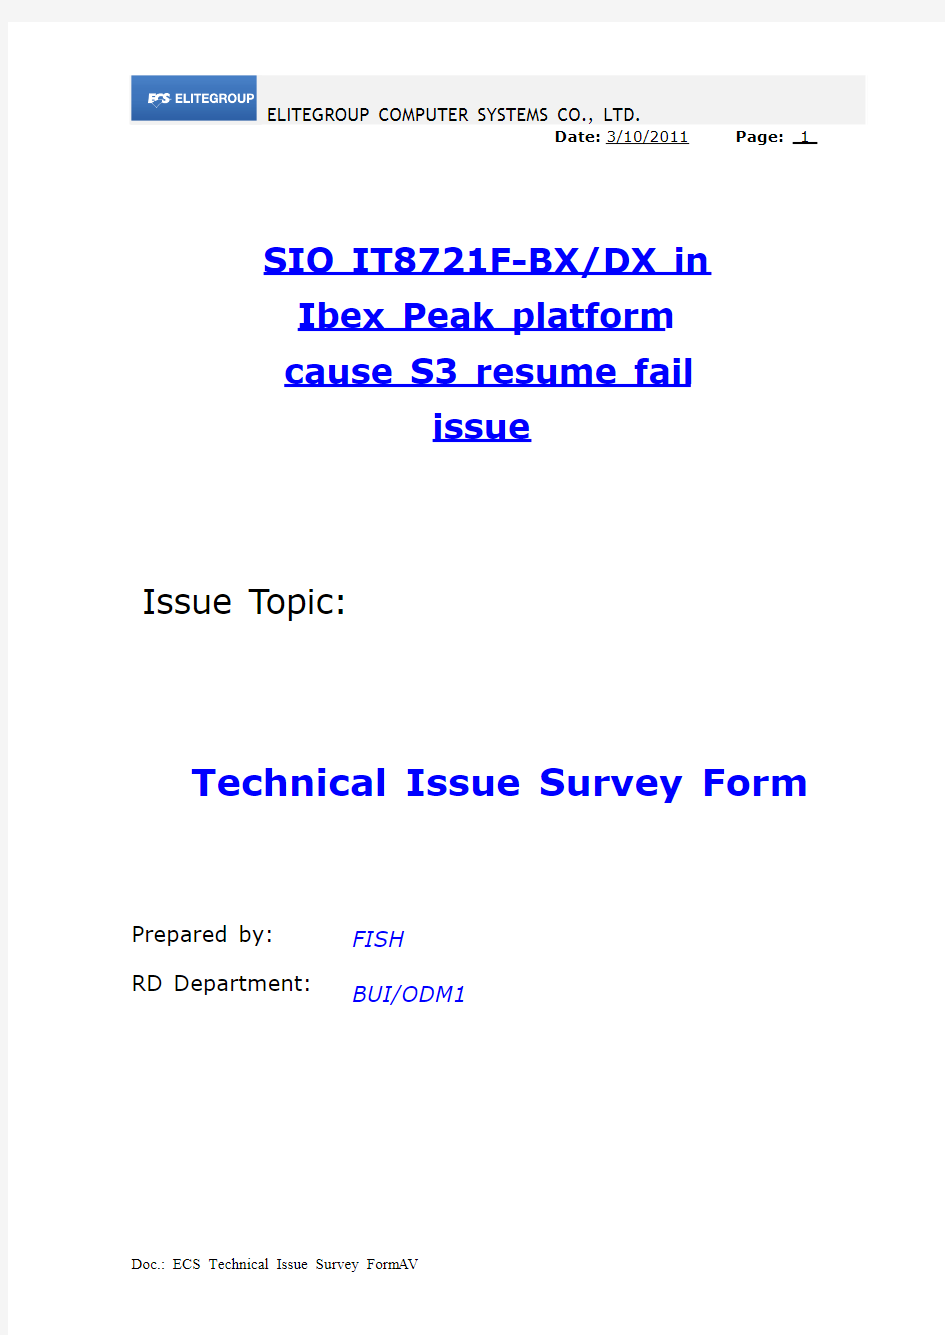 IT8721F-BX-DX in Ibex Peak platform cause S3 resume fail issue Survey Form